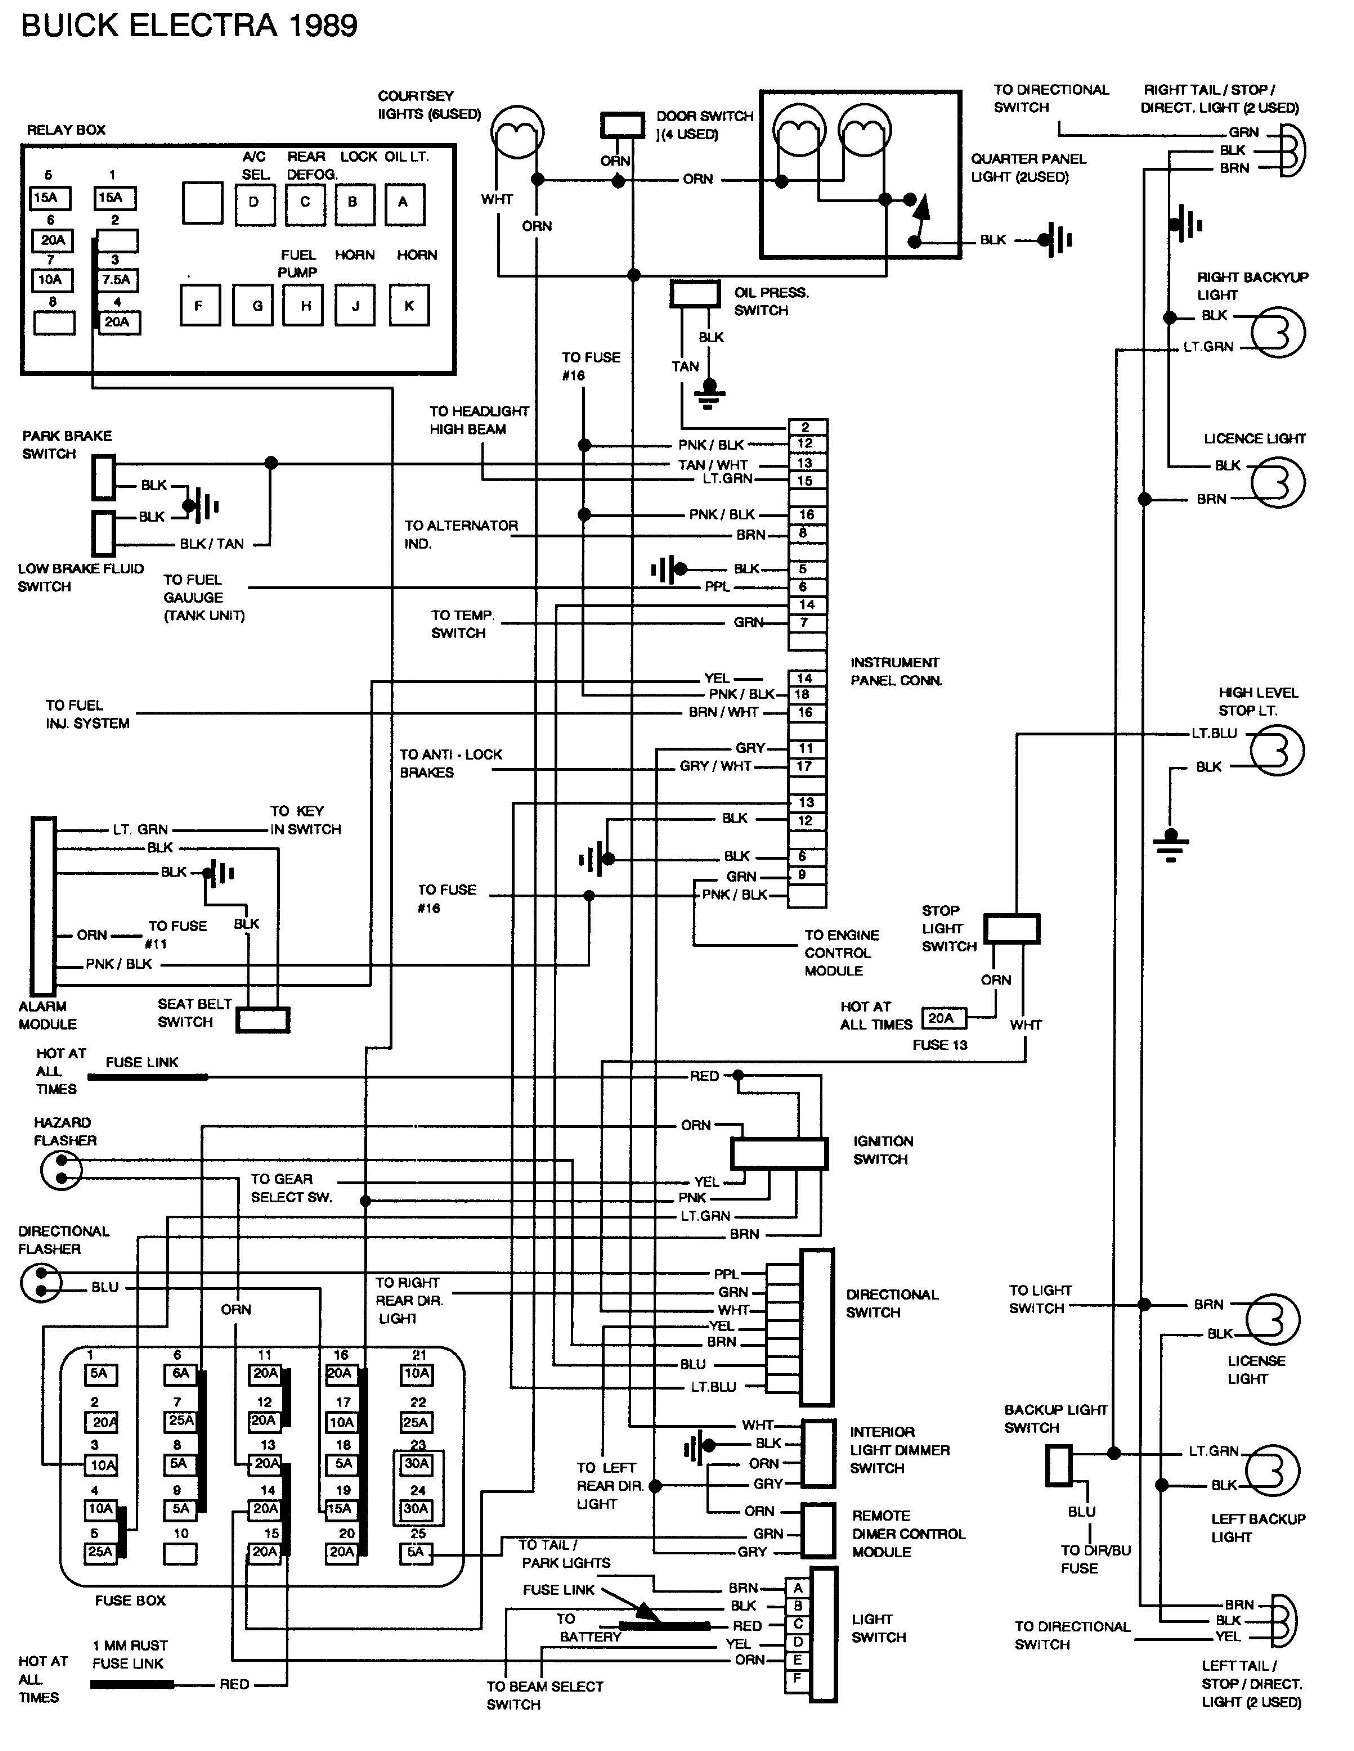 2003 Oldsmobile Alero Engine Diagram 2000 Oldsmobile Cutlass Supreme Radio Wiring Diagram Worksheet and Of 2003 Oldsmobile Alero Engine Diagram